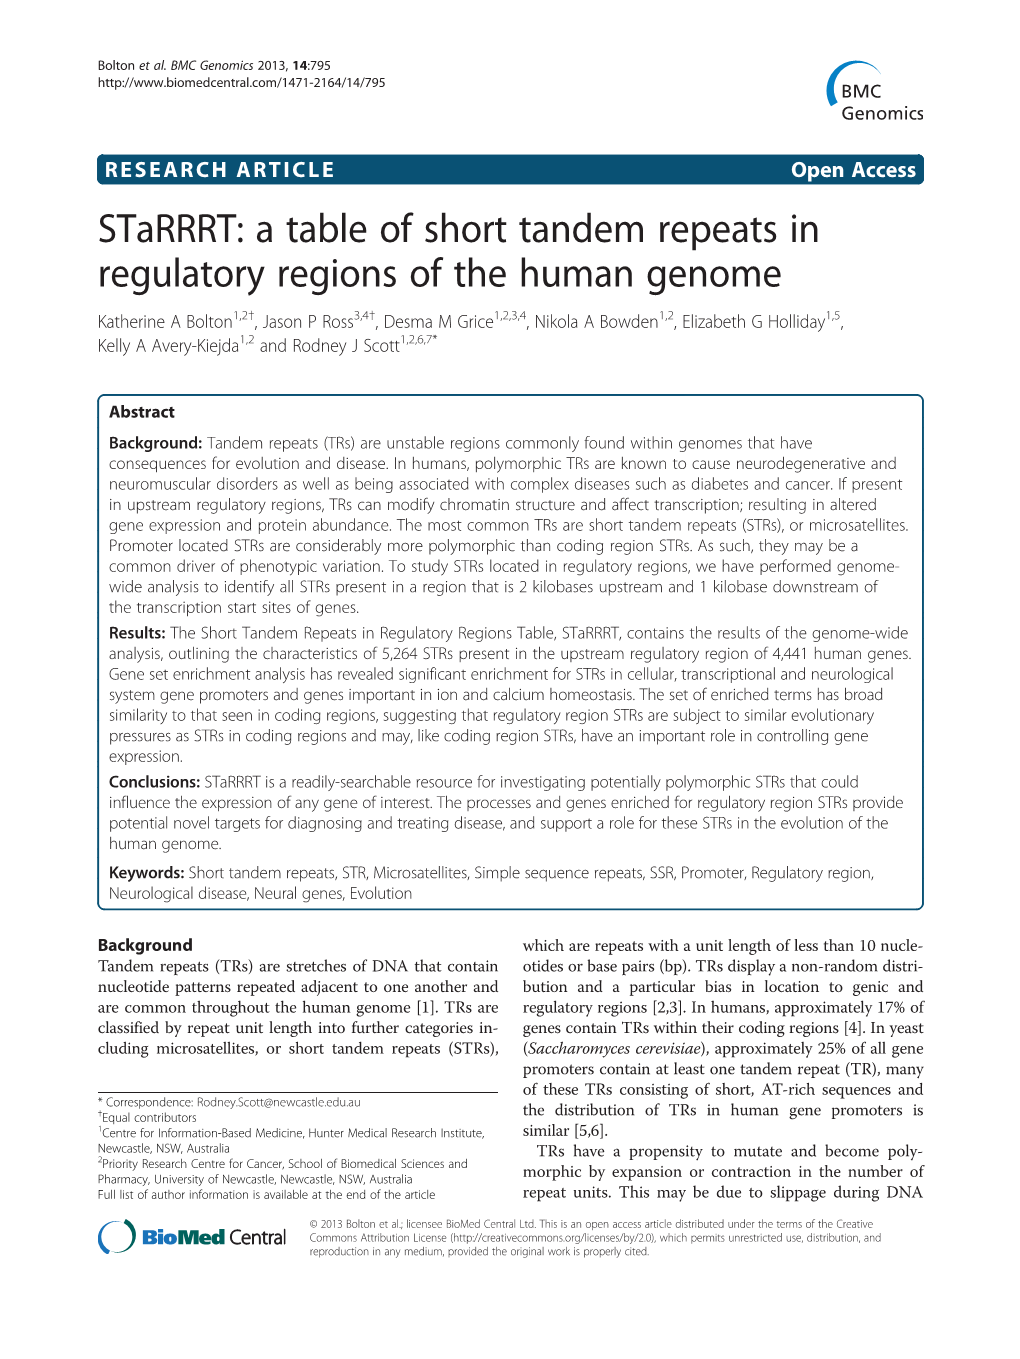 Starrrt: a Table of Short Tandem Repeats in Regulatory Regions of The